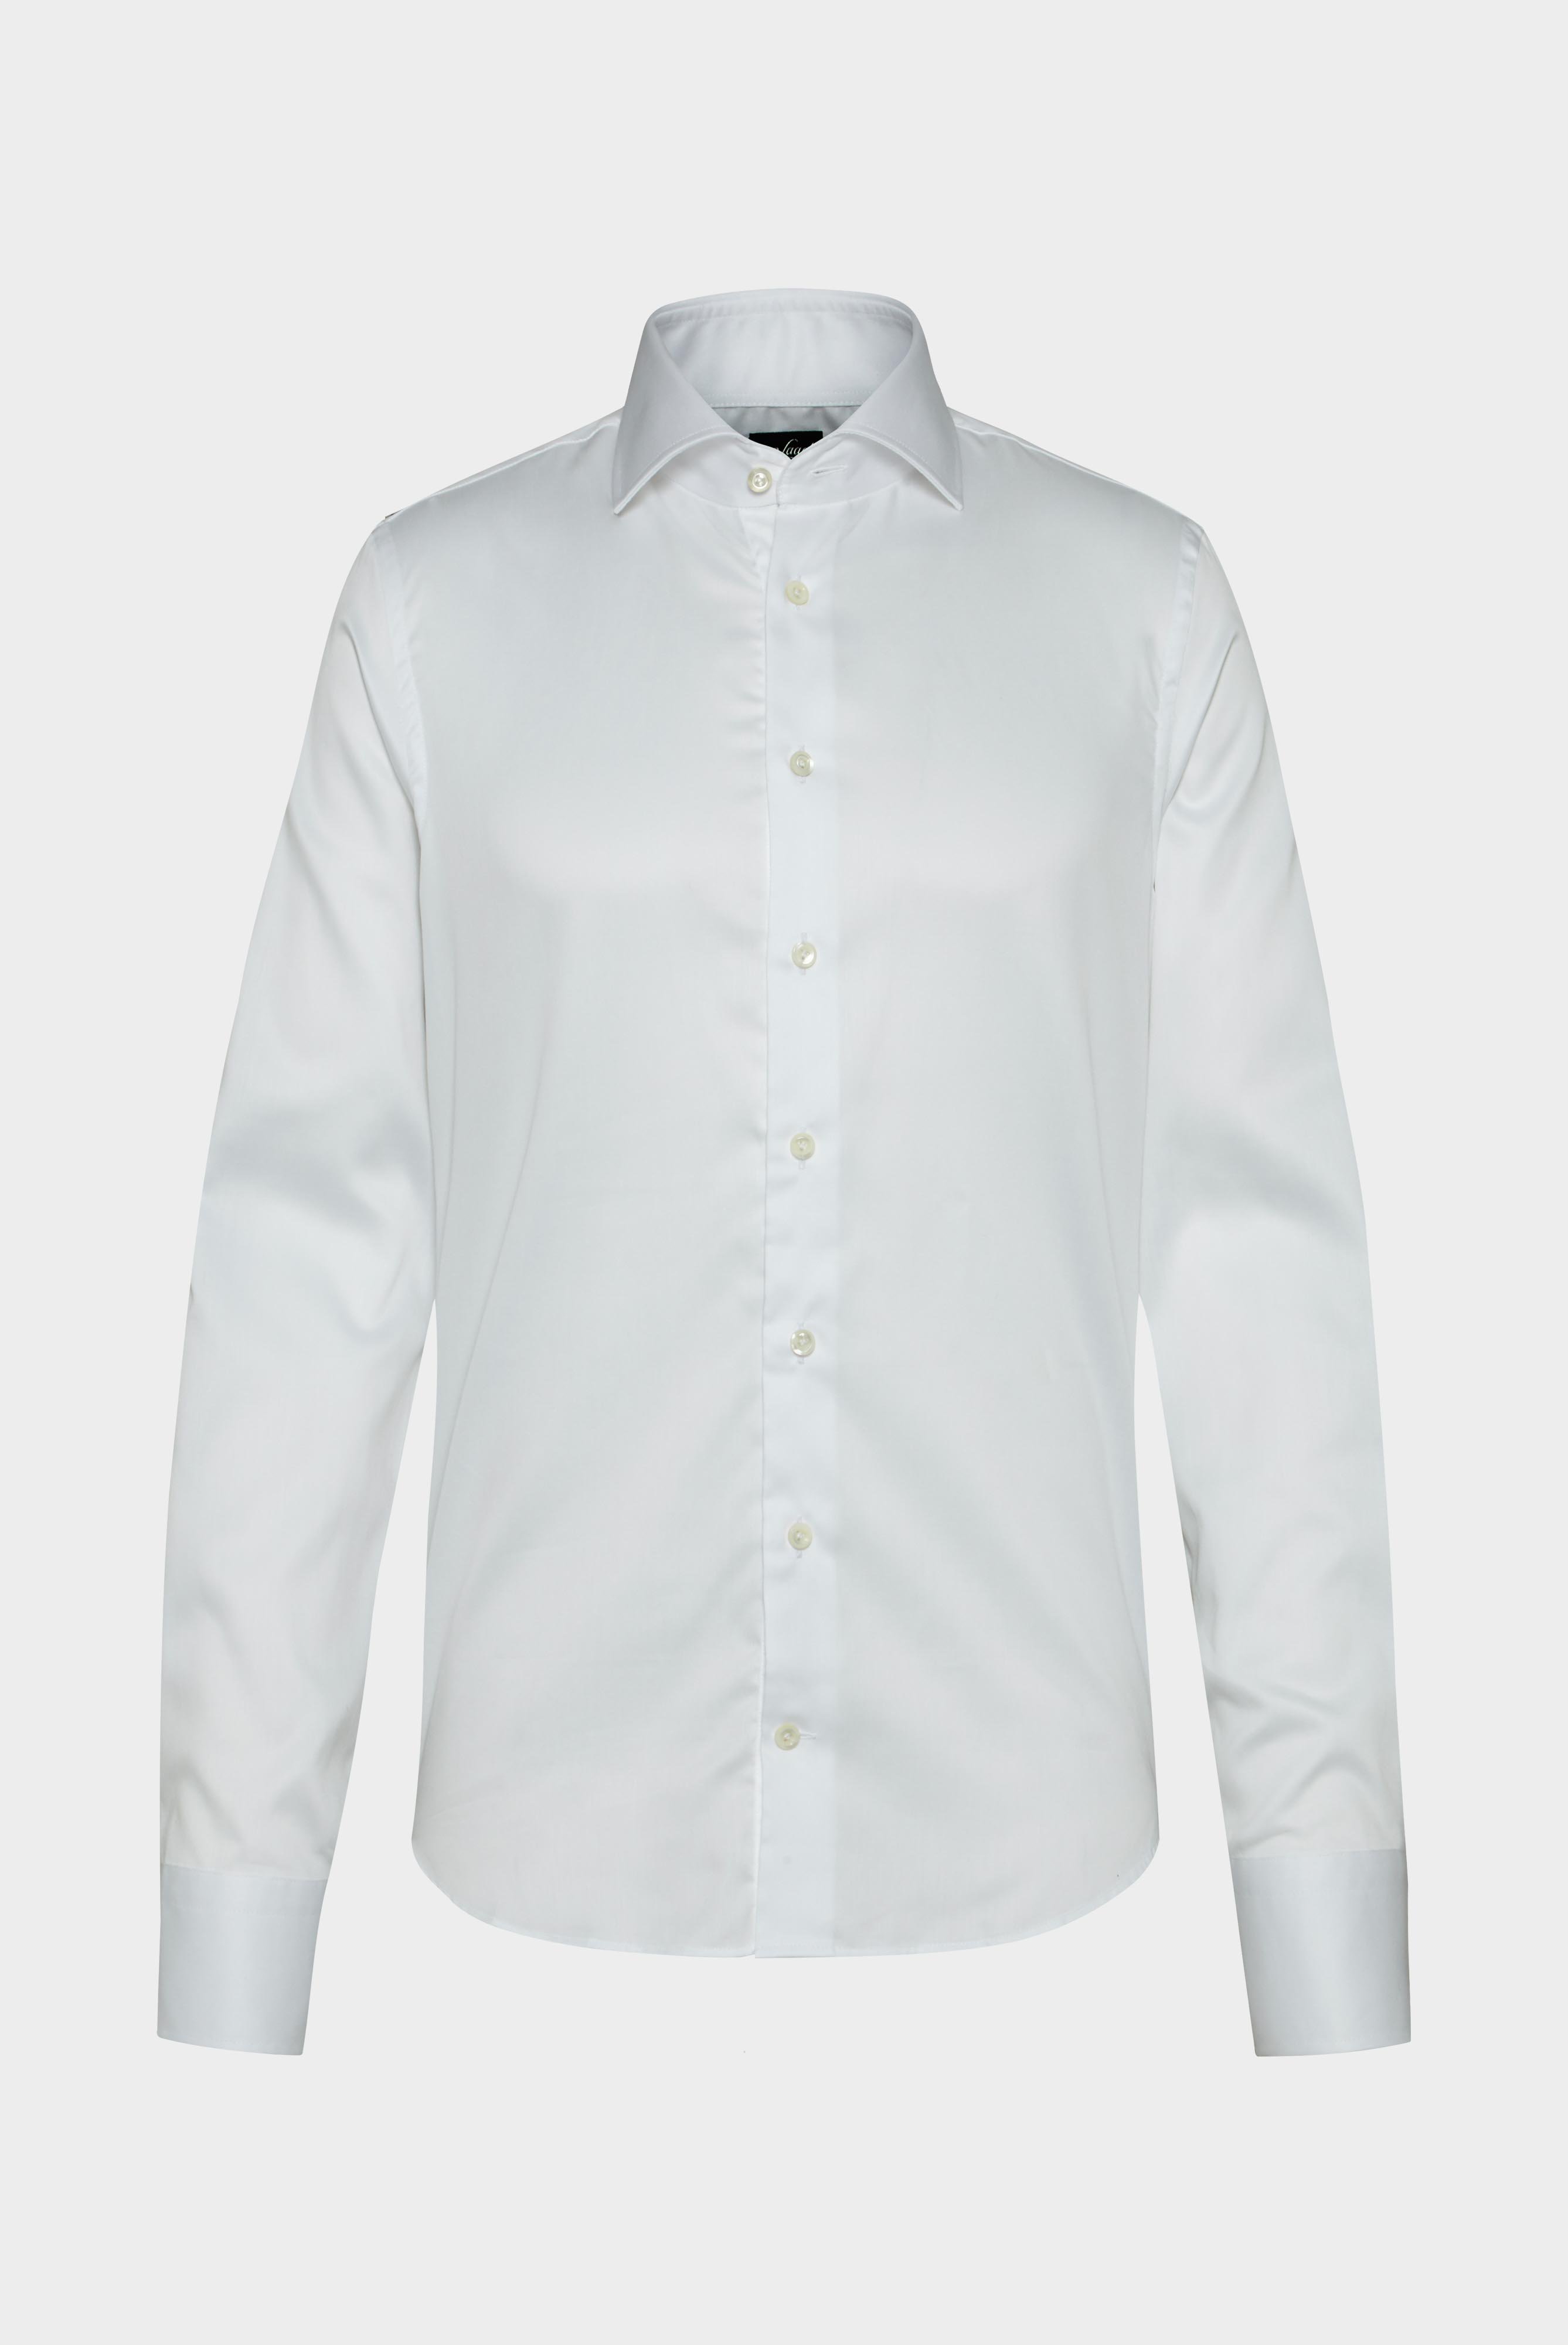 Easy Iron Shirts+Wrinkle-Free Fine-Twill Shirt+20.2019.BQ.132241.000.37